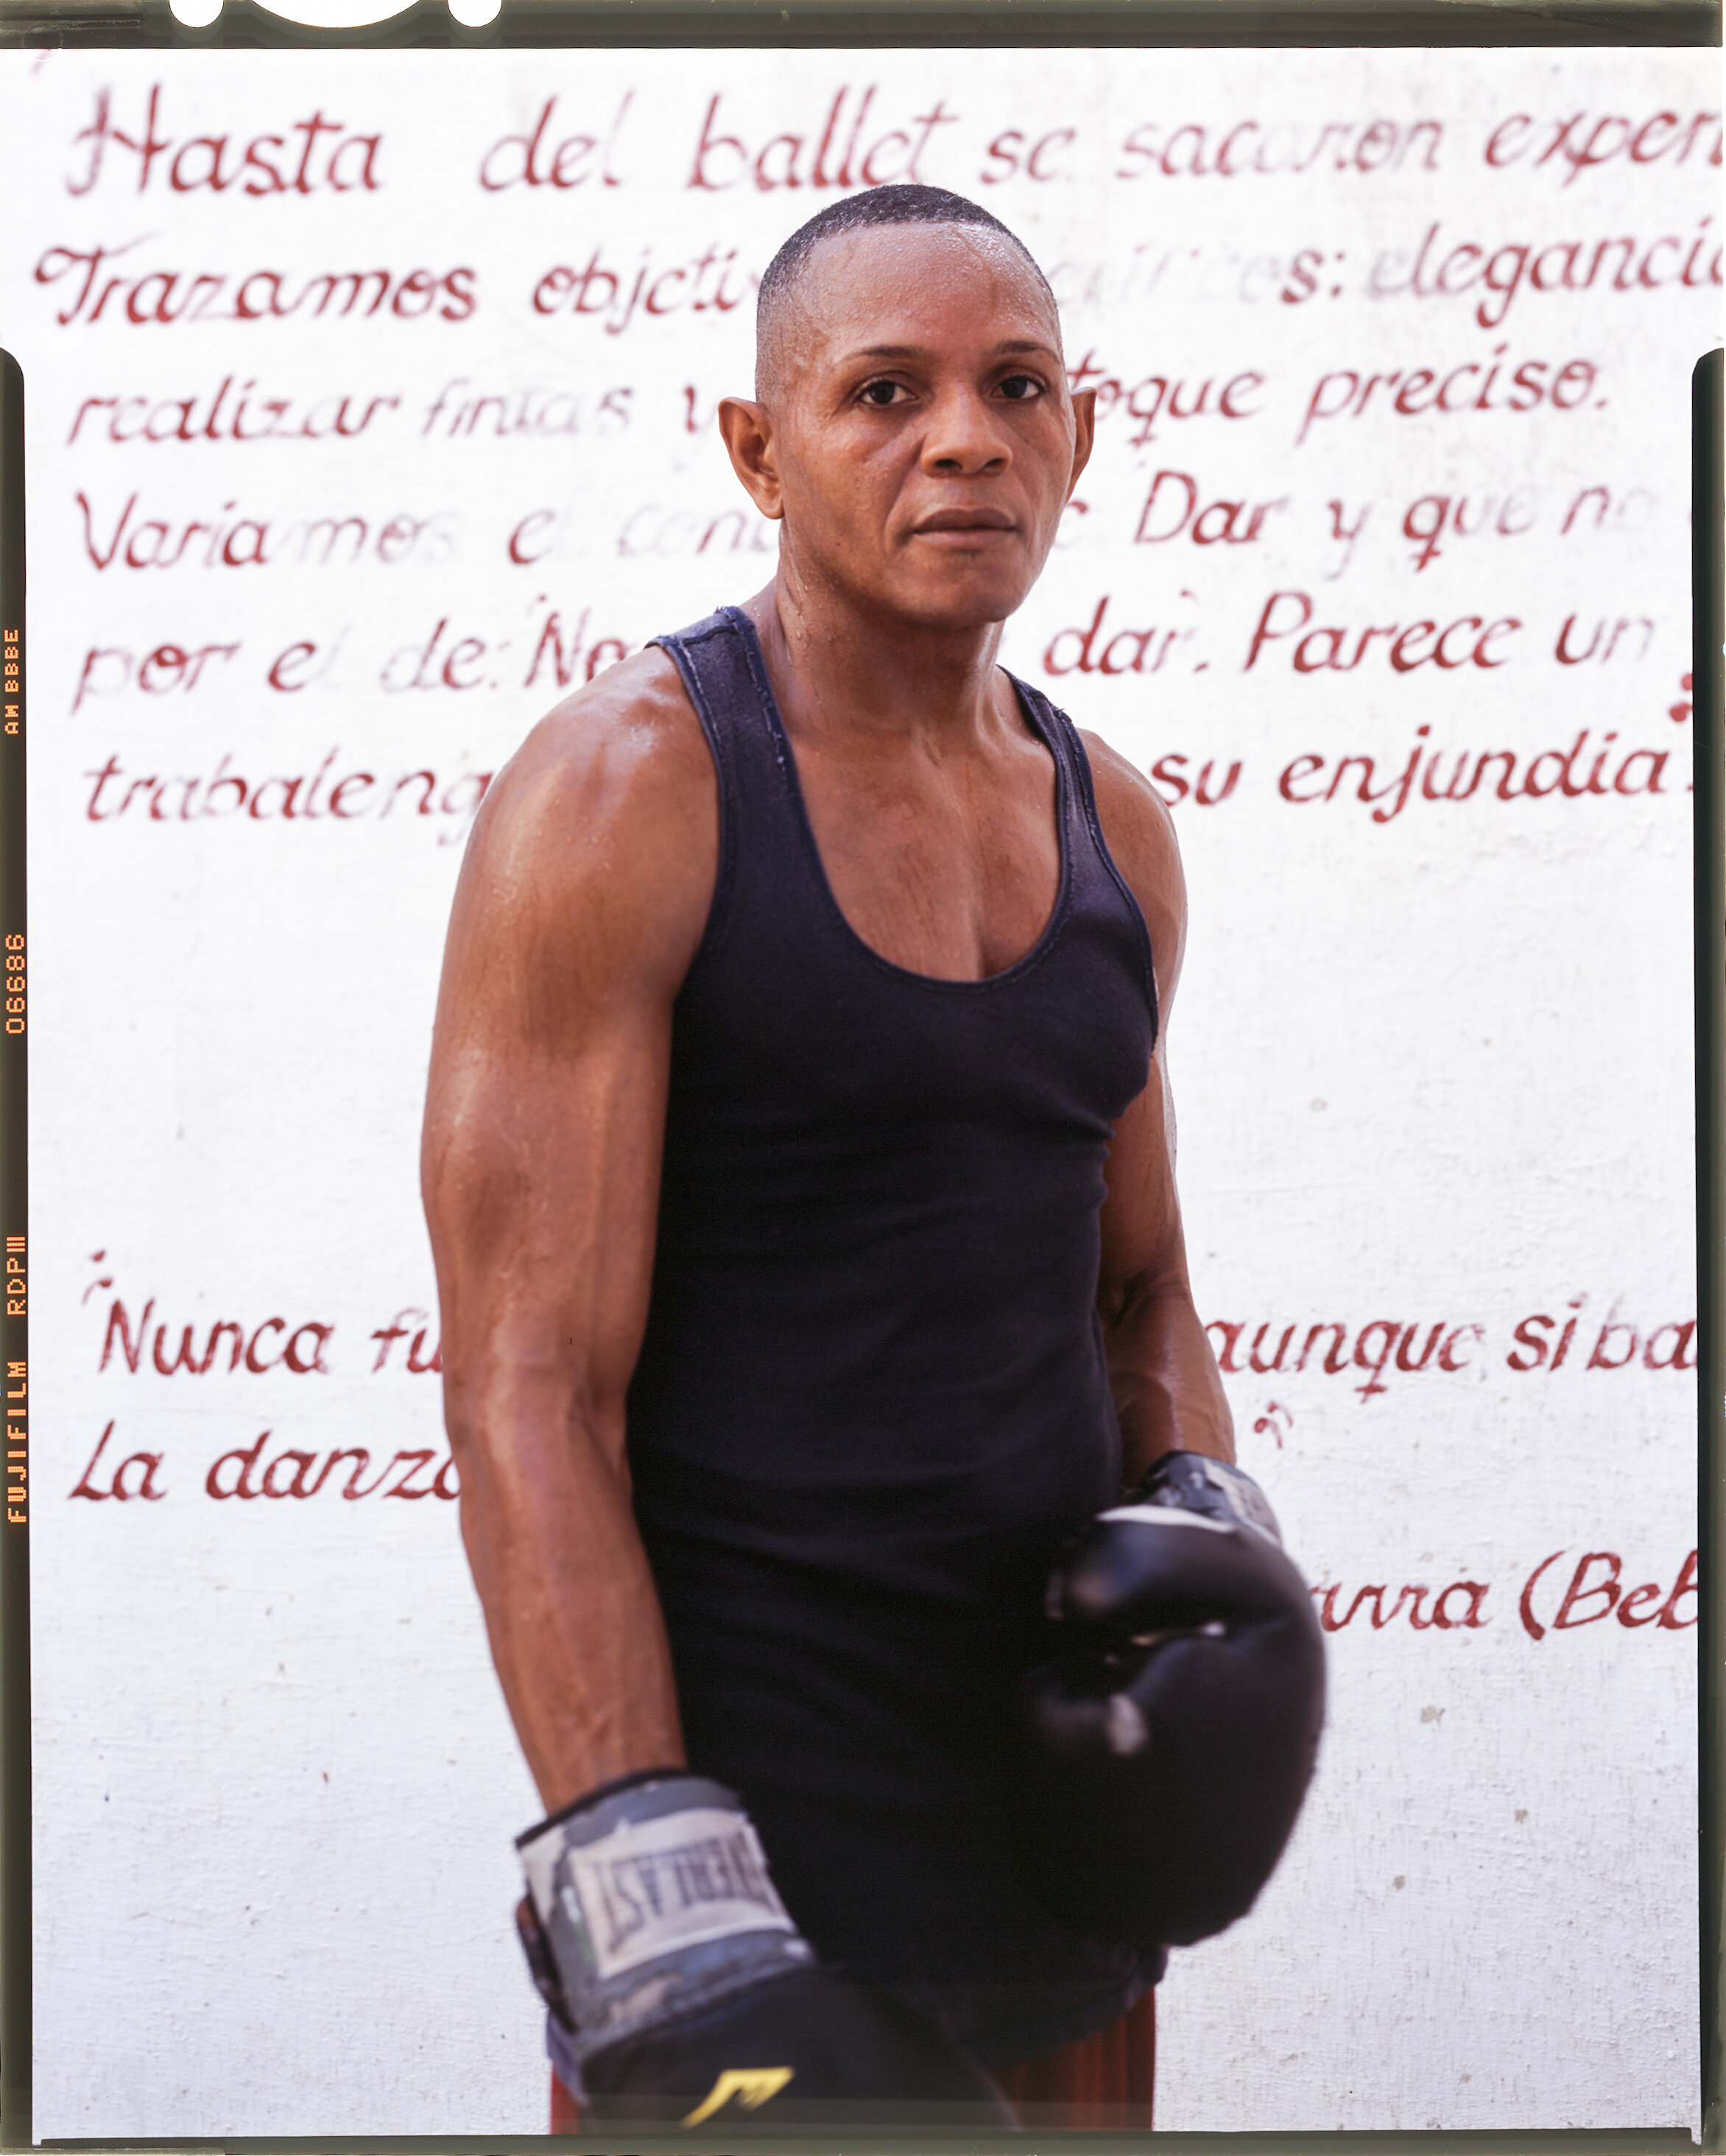 Cuba boxingsaveslives-14.jpg